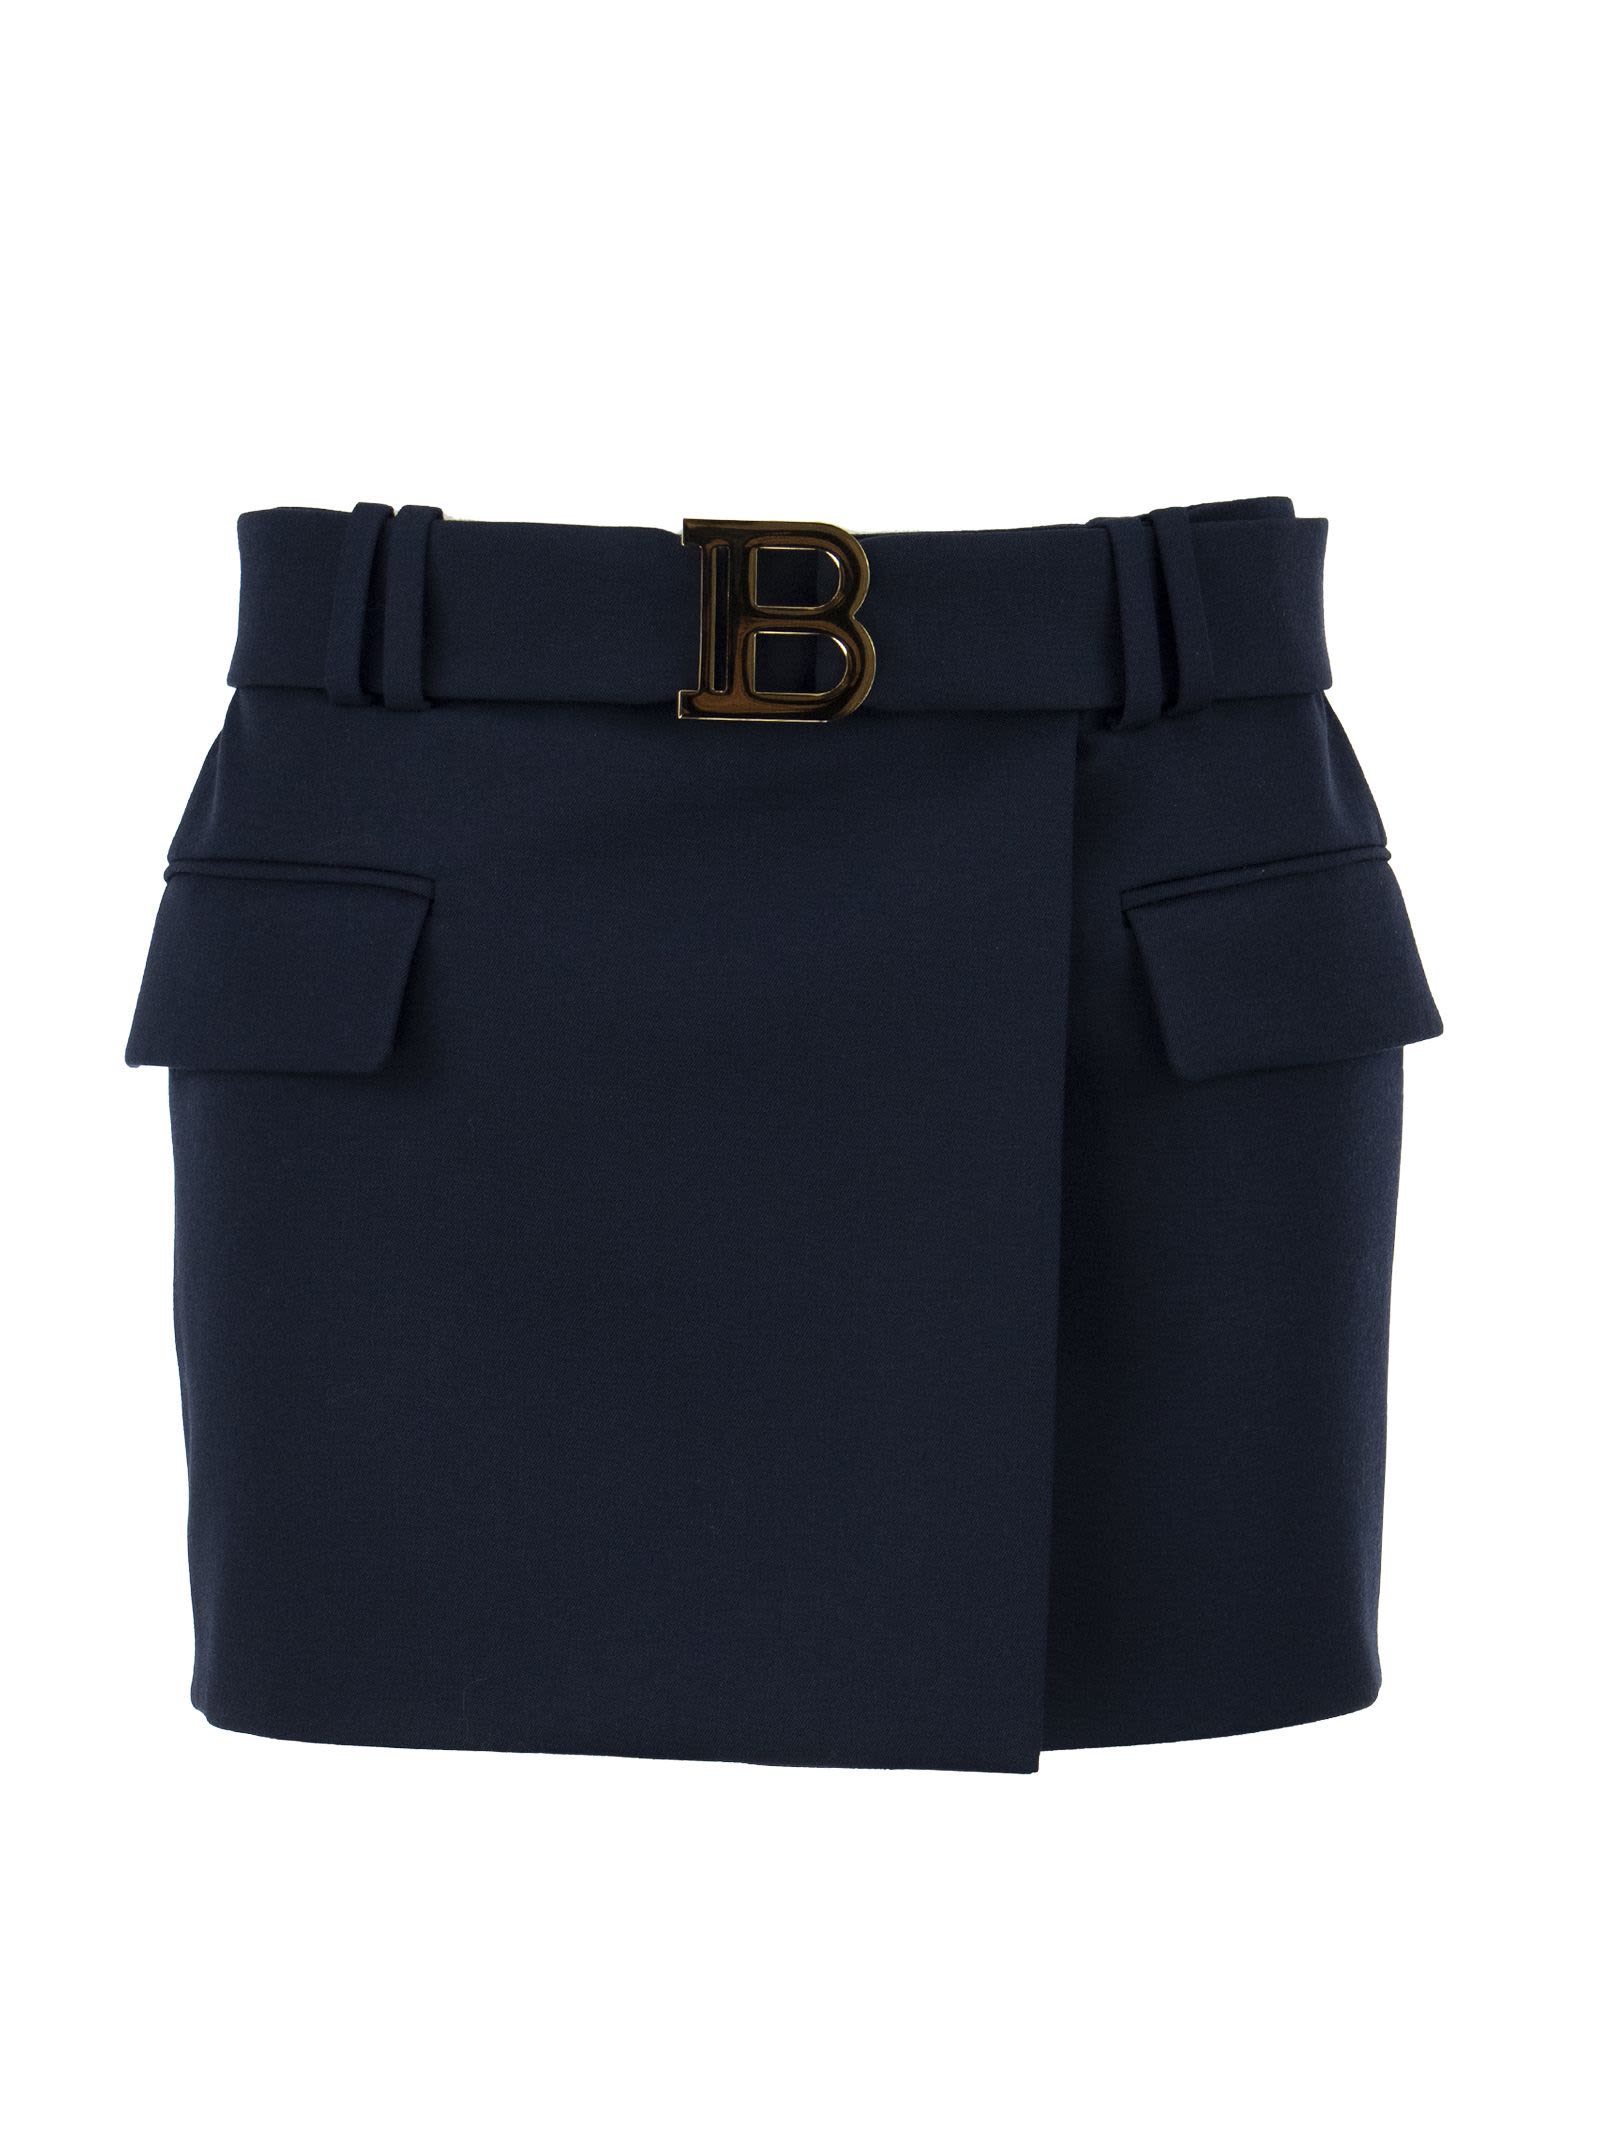 Balmain Short Blue Wool Low-rise Skirt